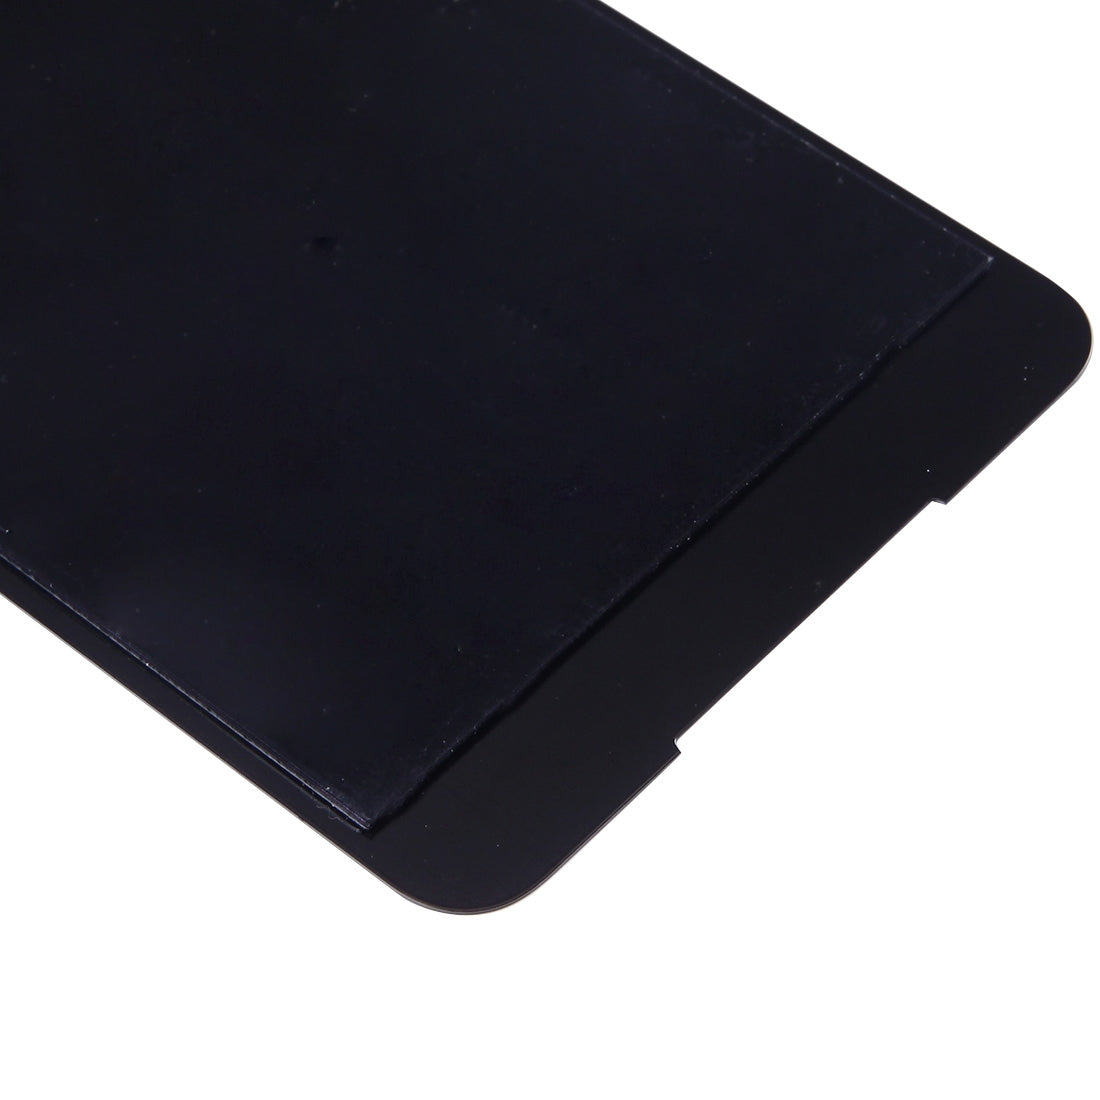 Pantalla LCD + Tactil Digitalizador Microsoft Lumia 650 Negro